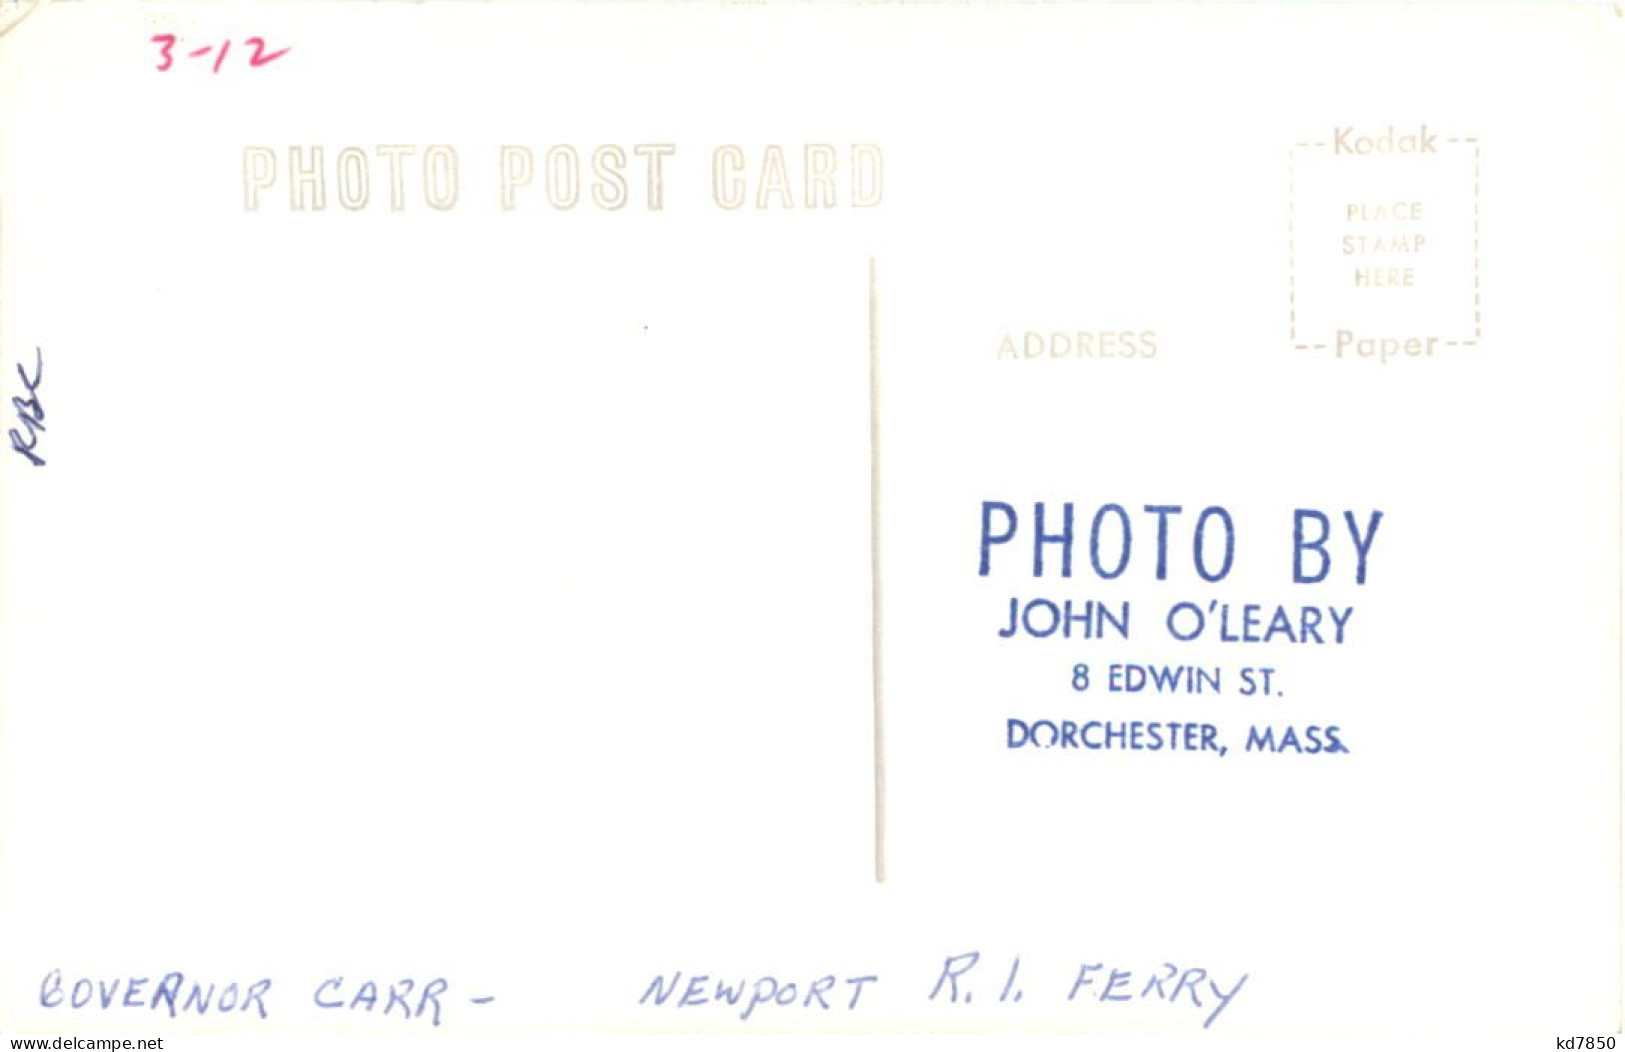 Governor Carr - Newport RI Ferry - Fähren